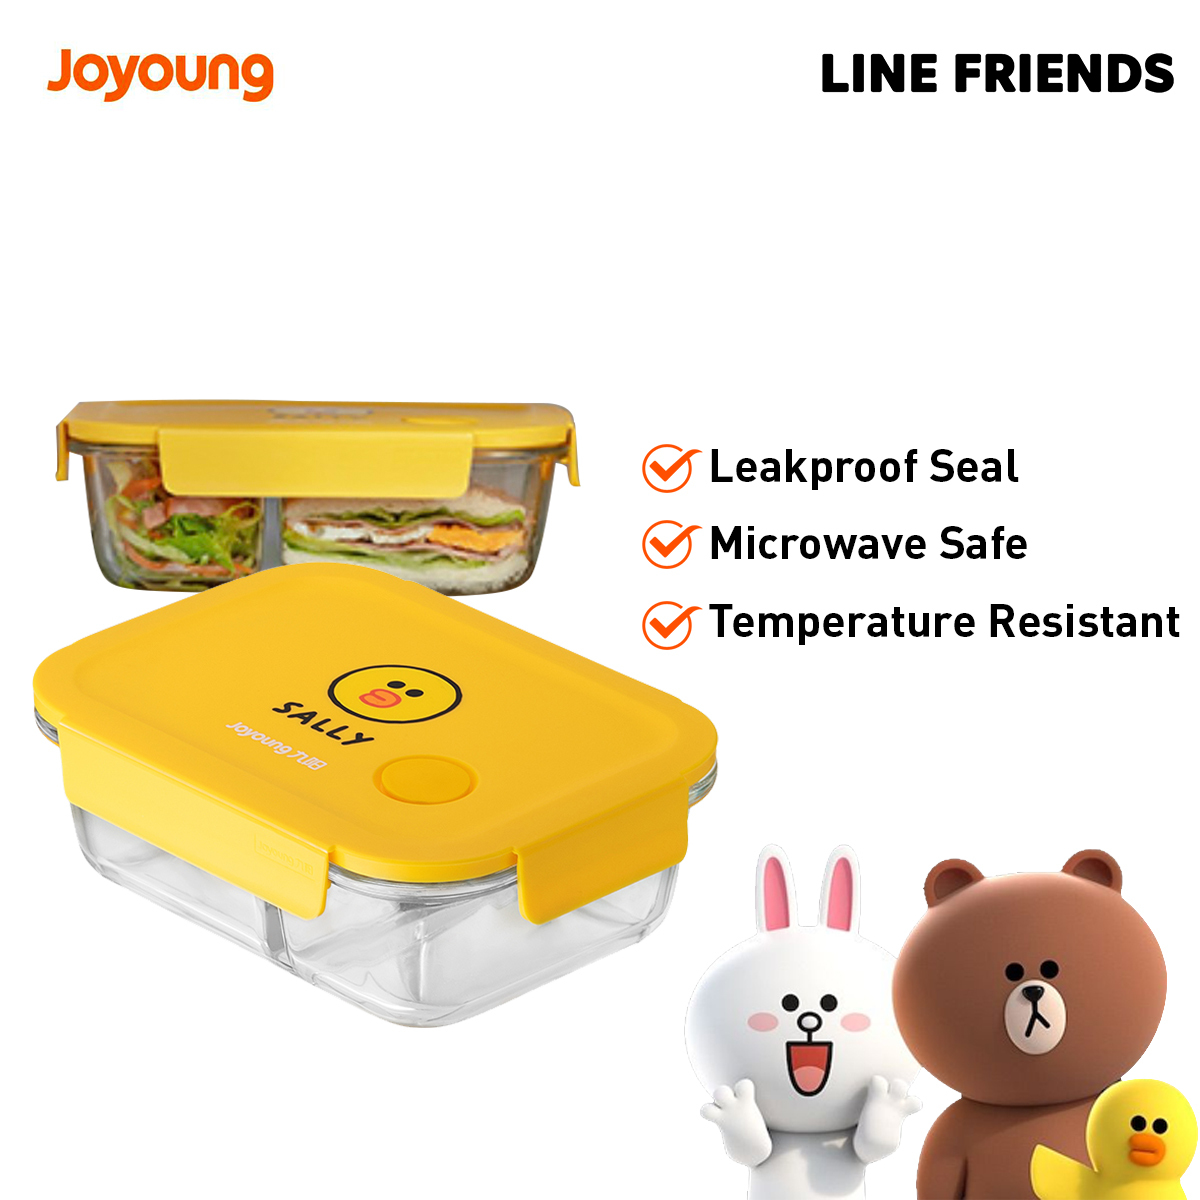 Joyoung X Line Friends Glass Lunch Box